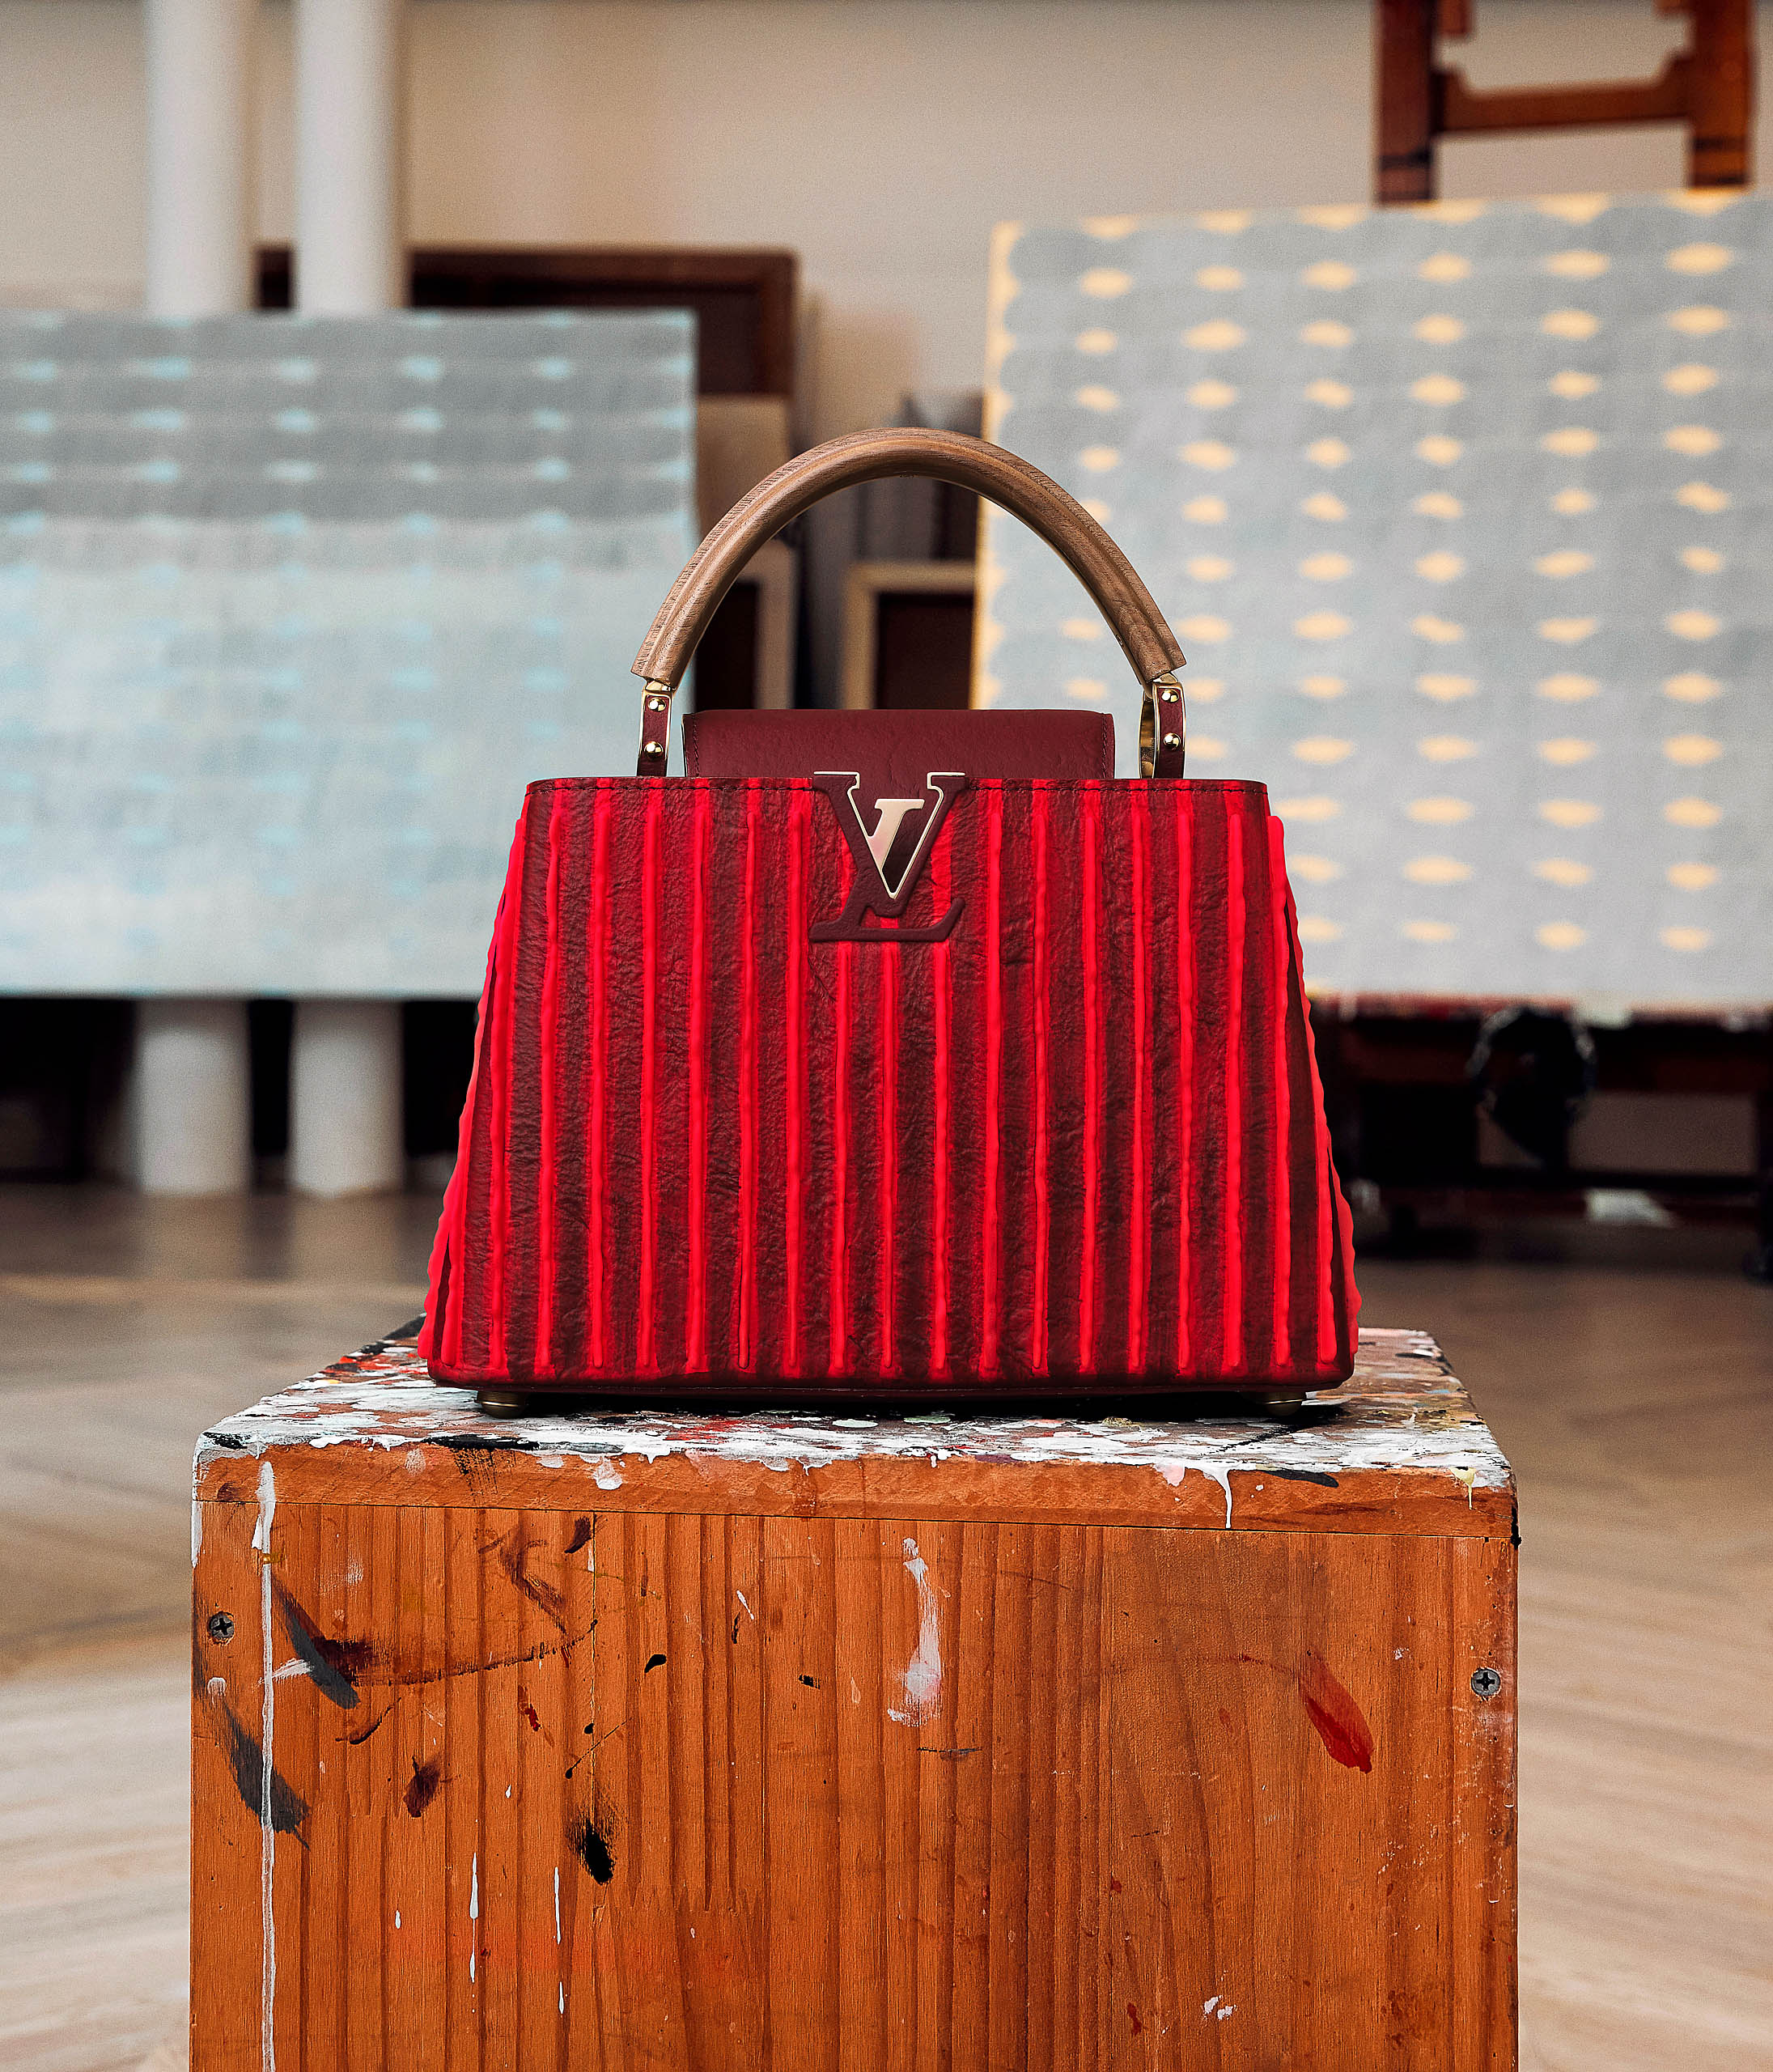 Louis Vuitton Artycapucines Bag